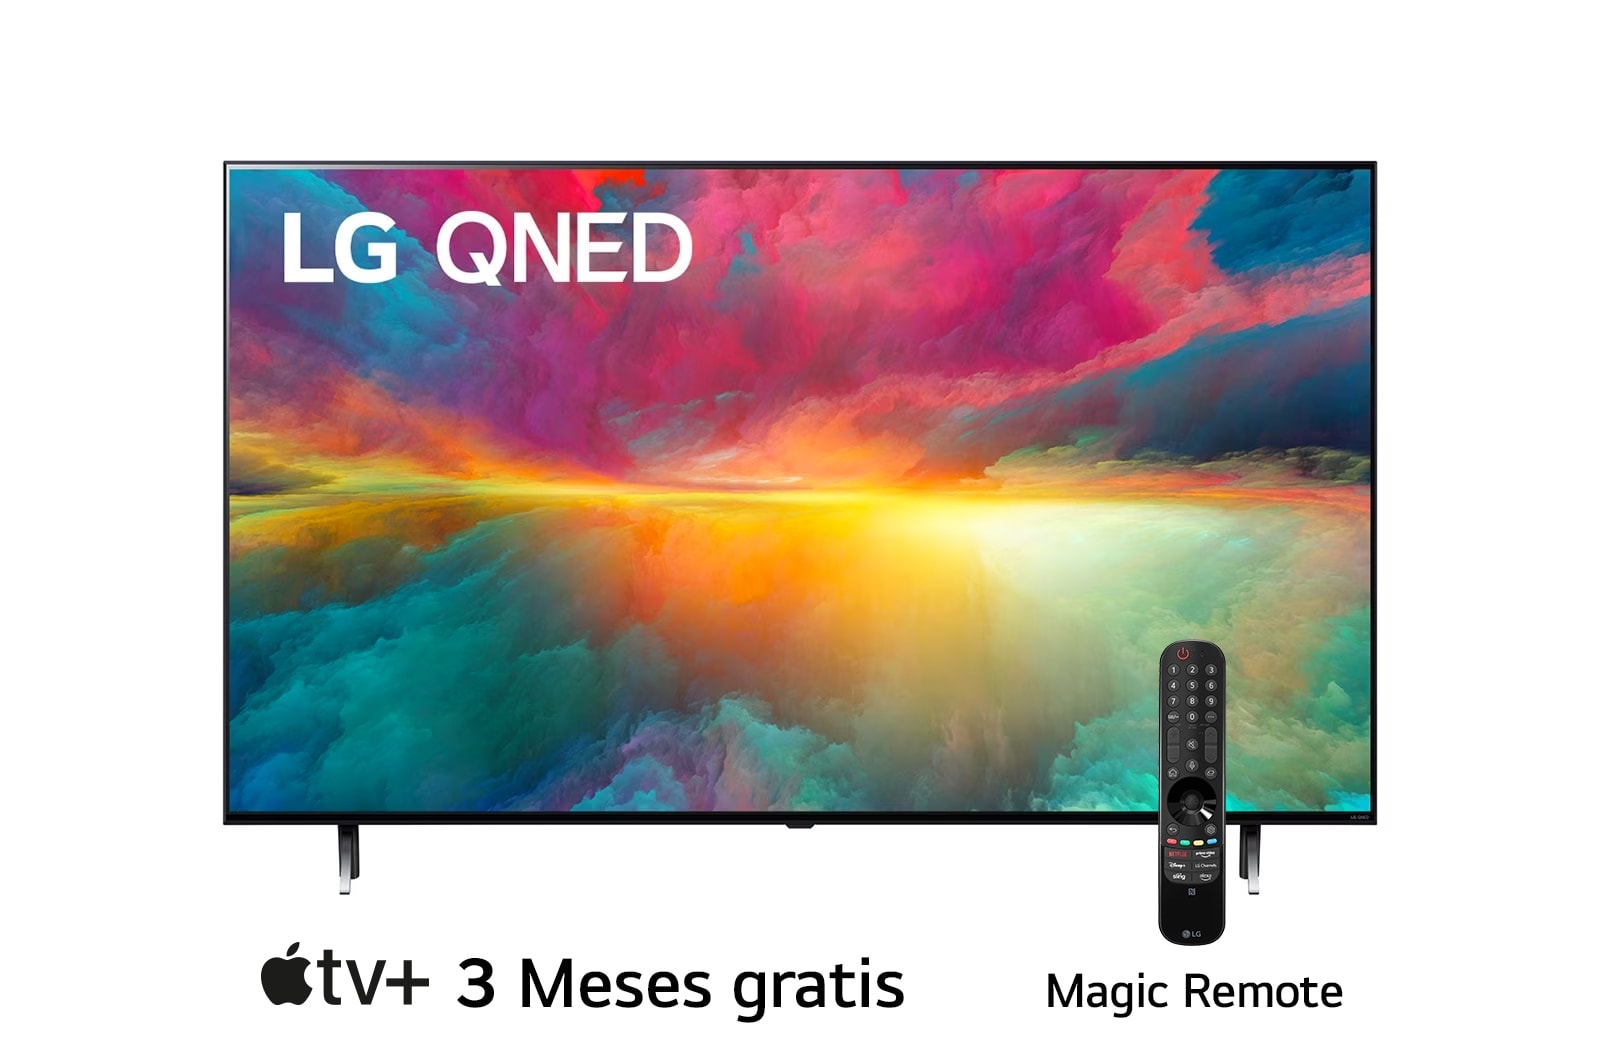 LG Pantalla LG QNED 75 55'' 4K SMART TV con ThinQ AI, Una vista frontal del televisor LG QNED con una imagen de relleno y el logotipo del producto en, 55QNED75SRA